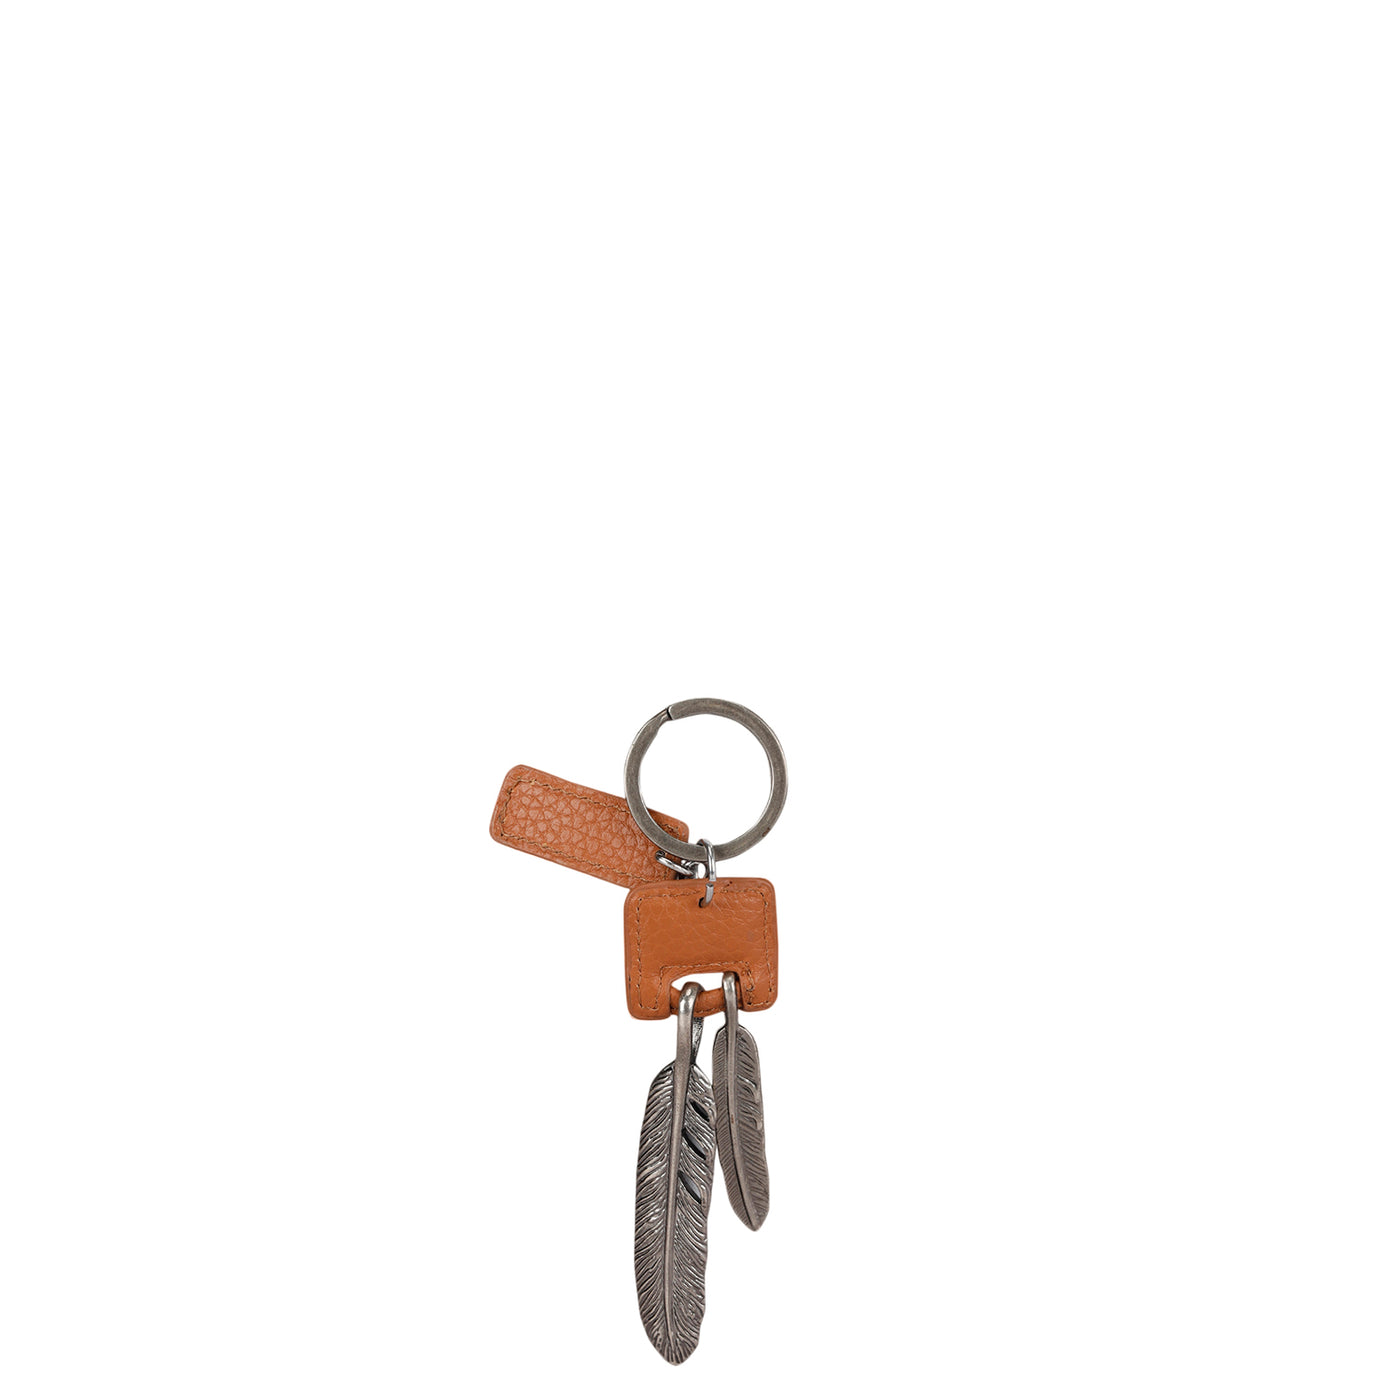 Wax Leather Key Chain - Caramel